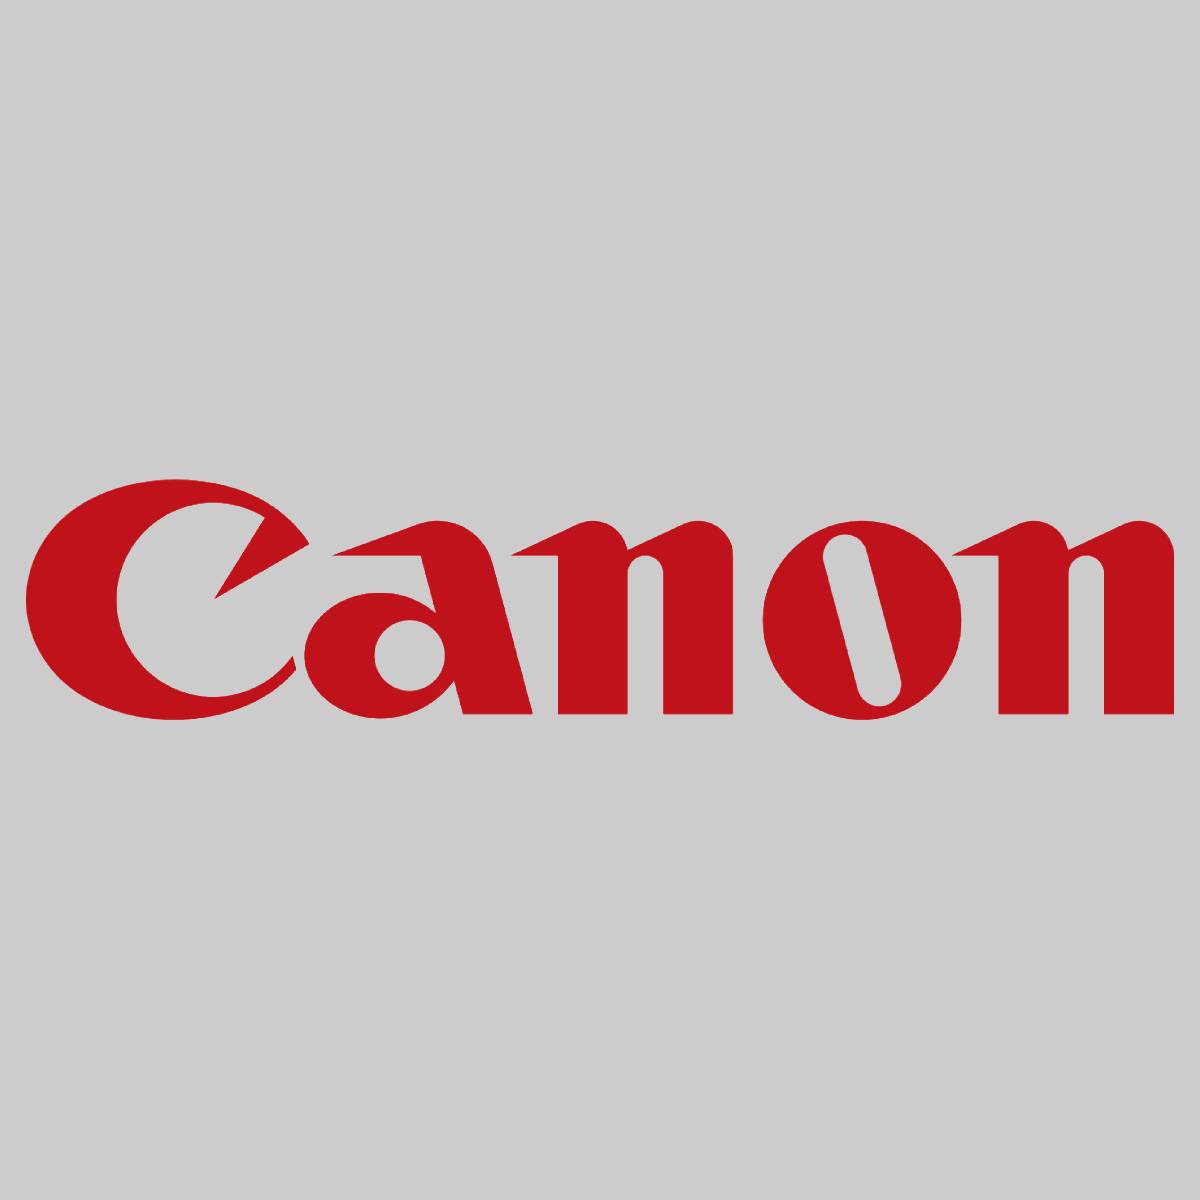 "Original Canon Developer Assembly Cyan FM4-6614 imageRUNNER Adv. C7055 C7065